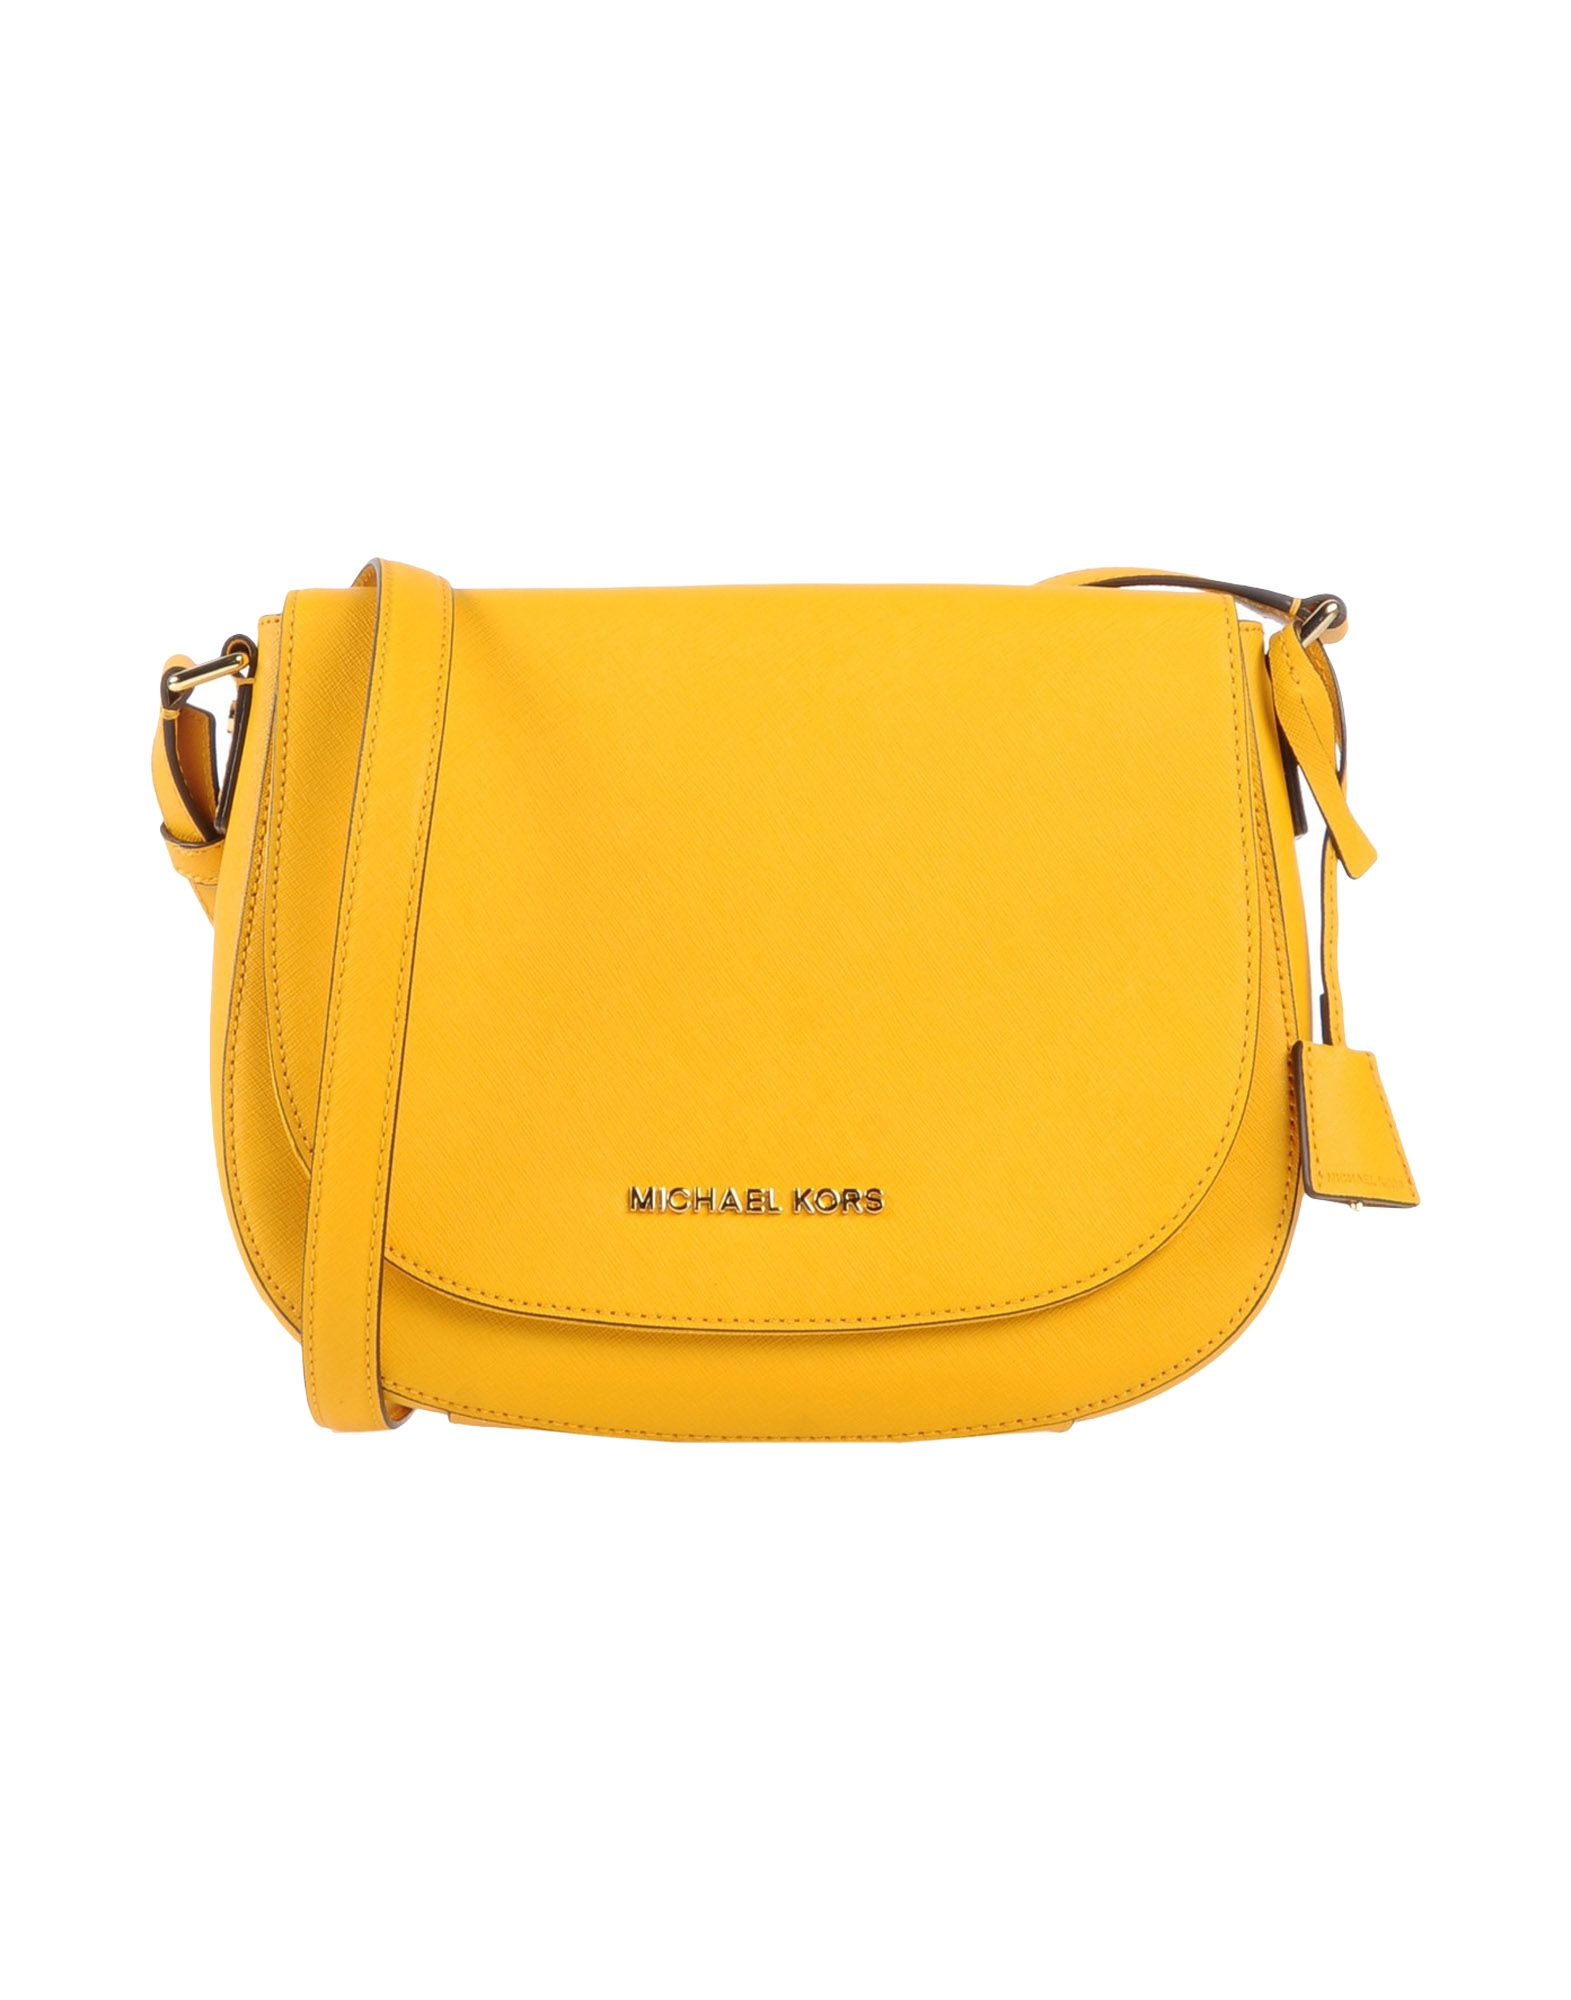 Lyst - Michael Michael Kors Cross-body Bag in Yellow